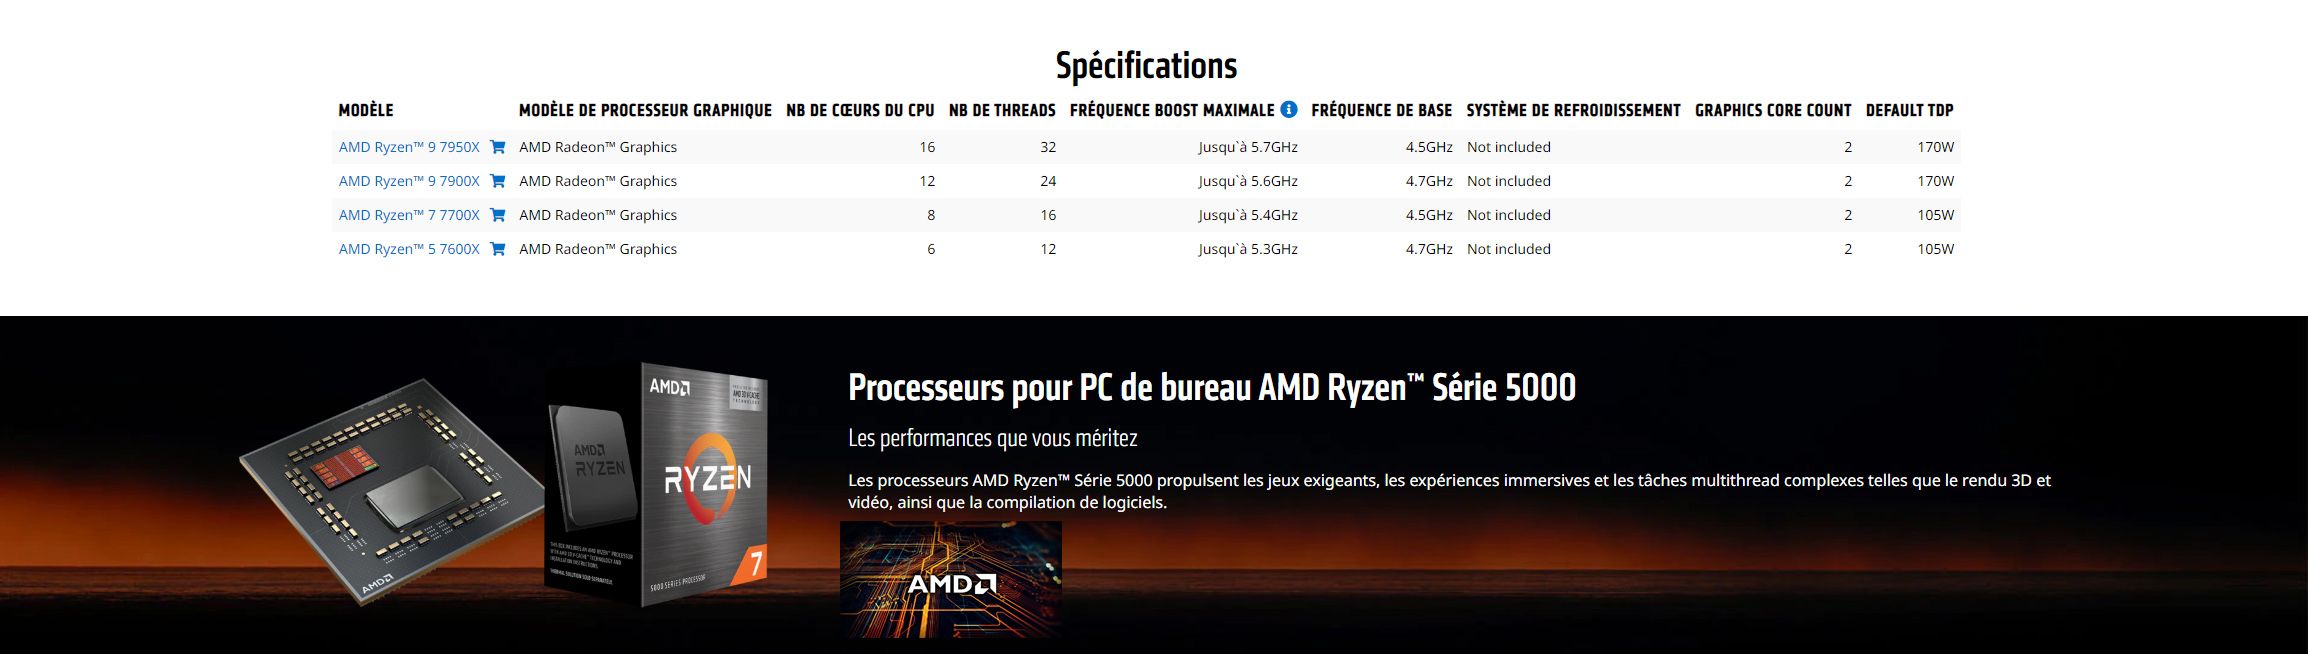 AMD processeurs